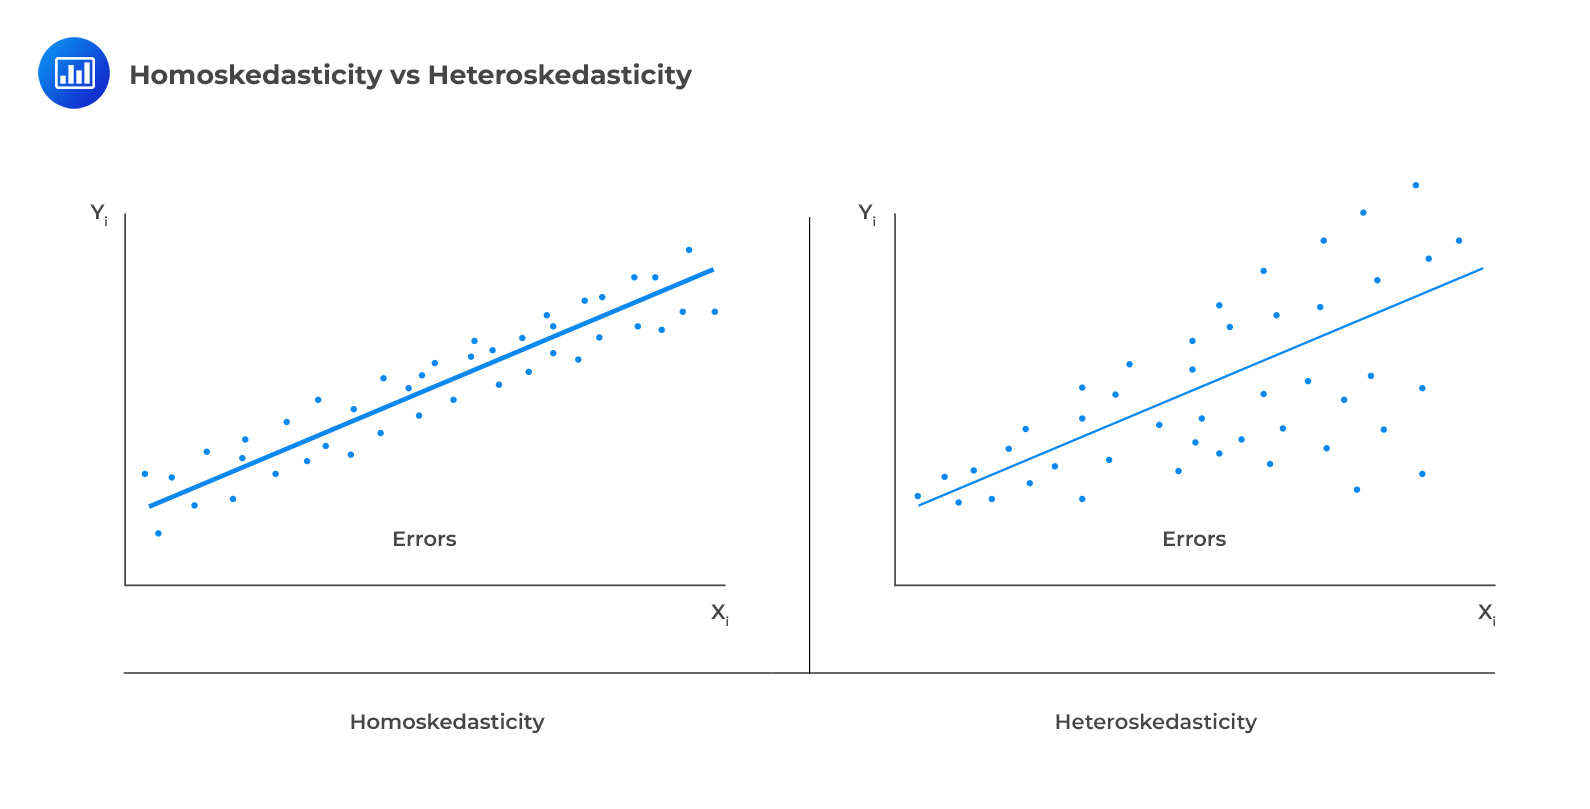 Homoskedasticity vs Heteroskedasticity